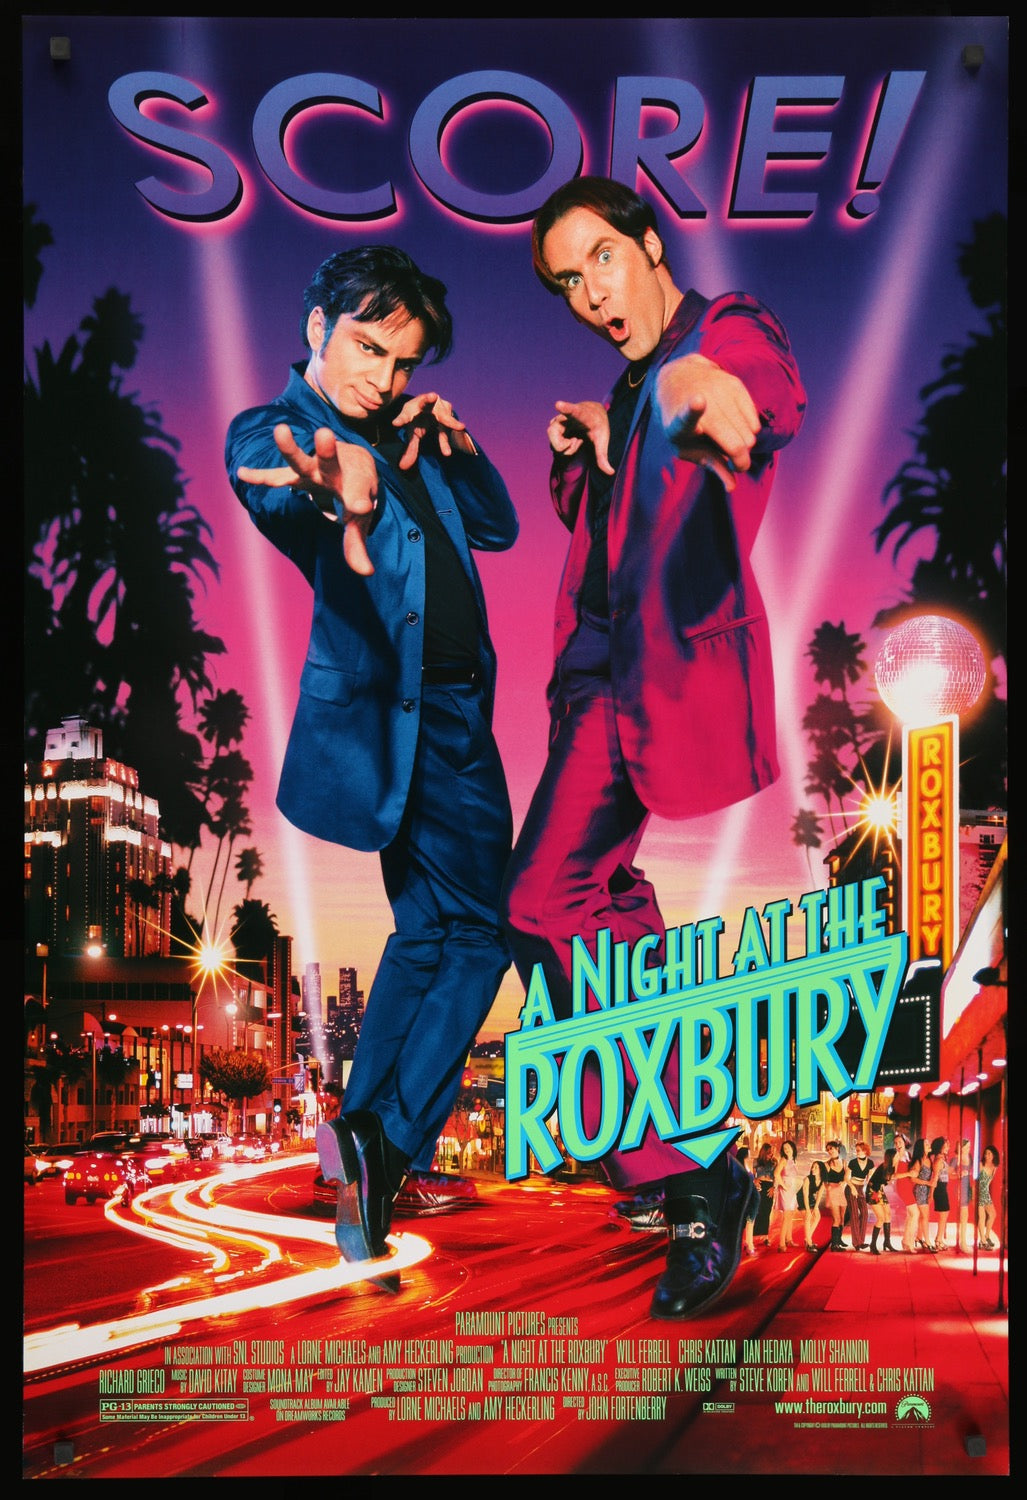 Night at the Roxbury (1998) original movie poster for sale at Original Film Art